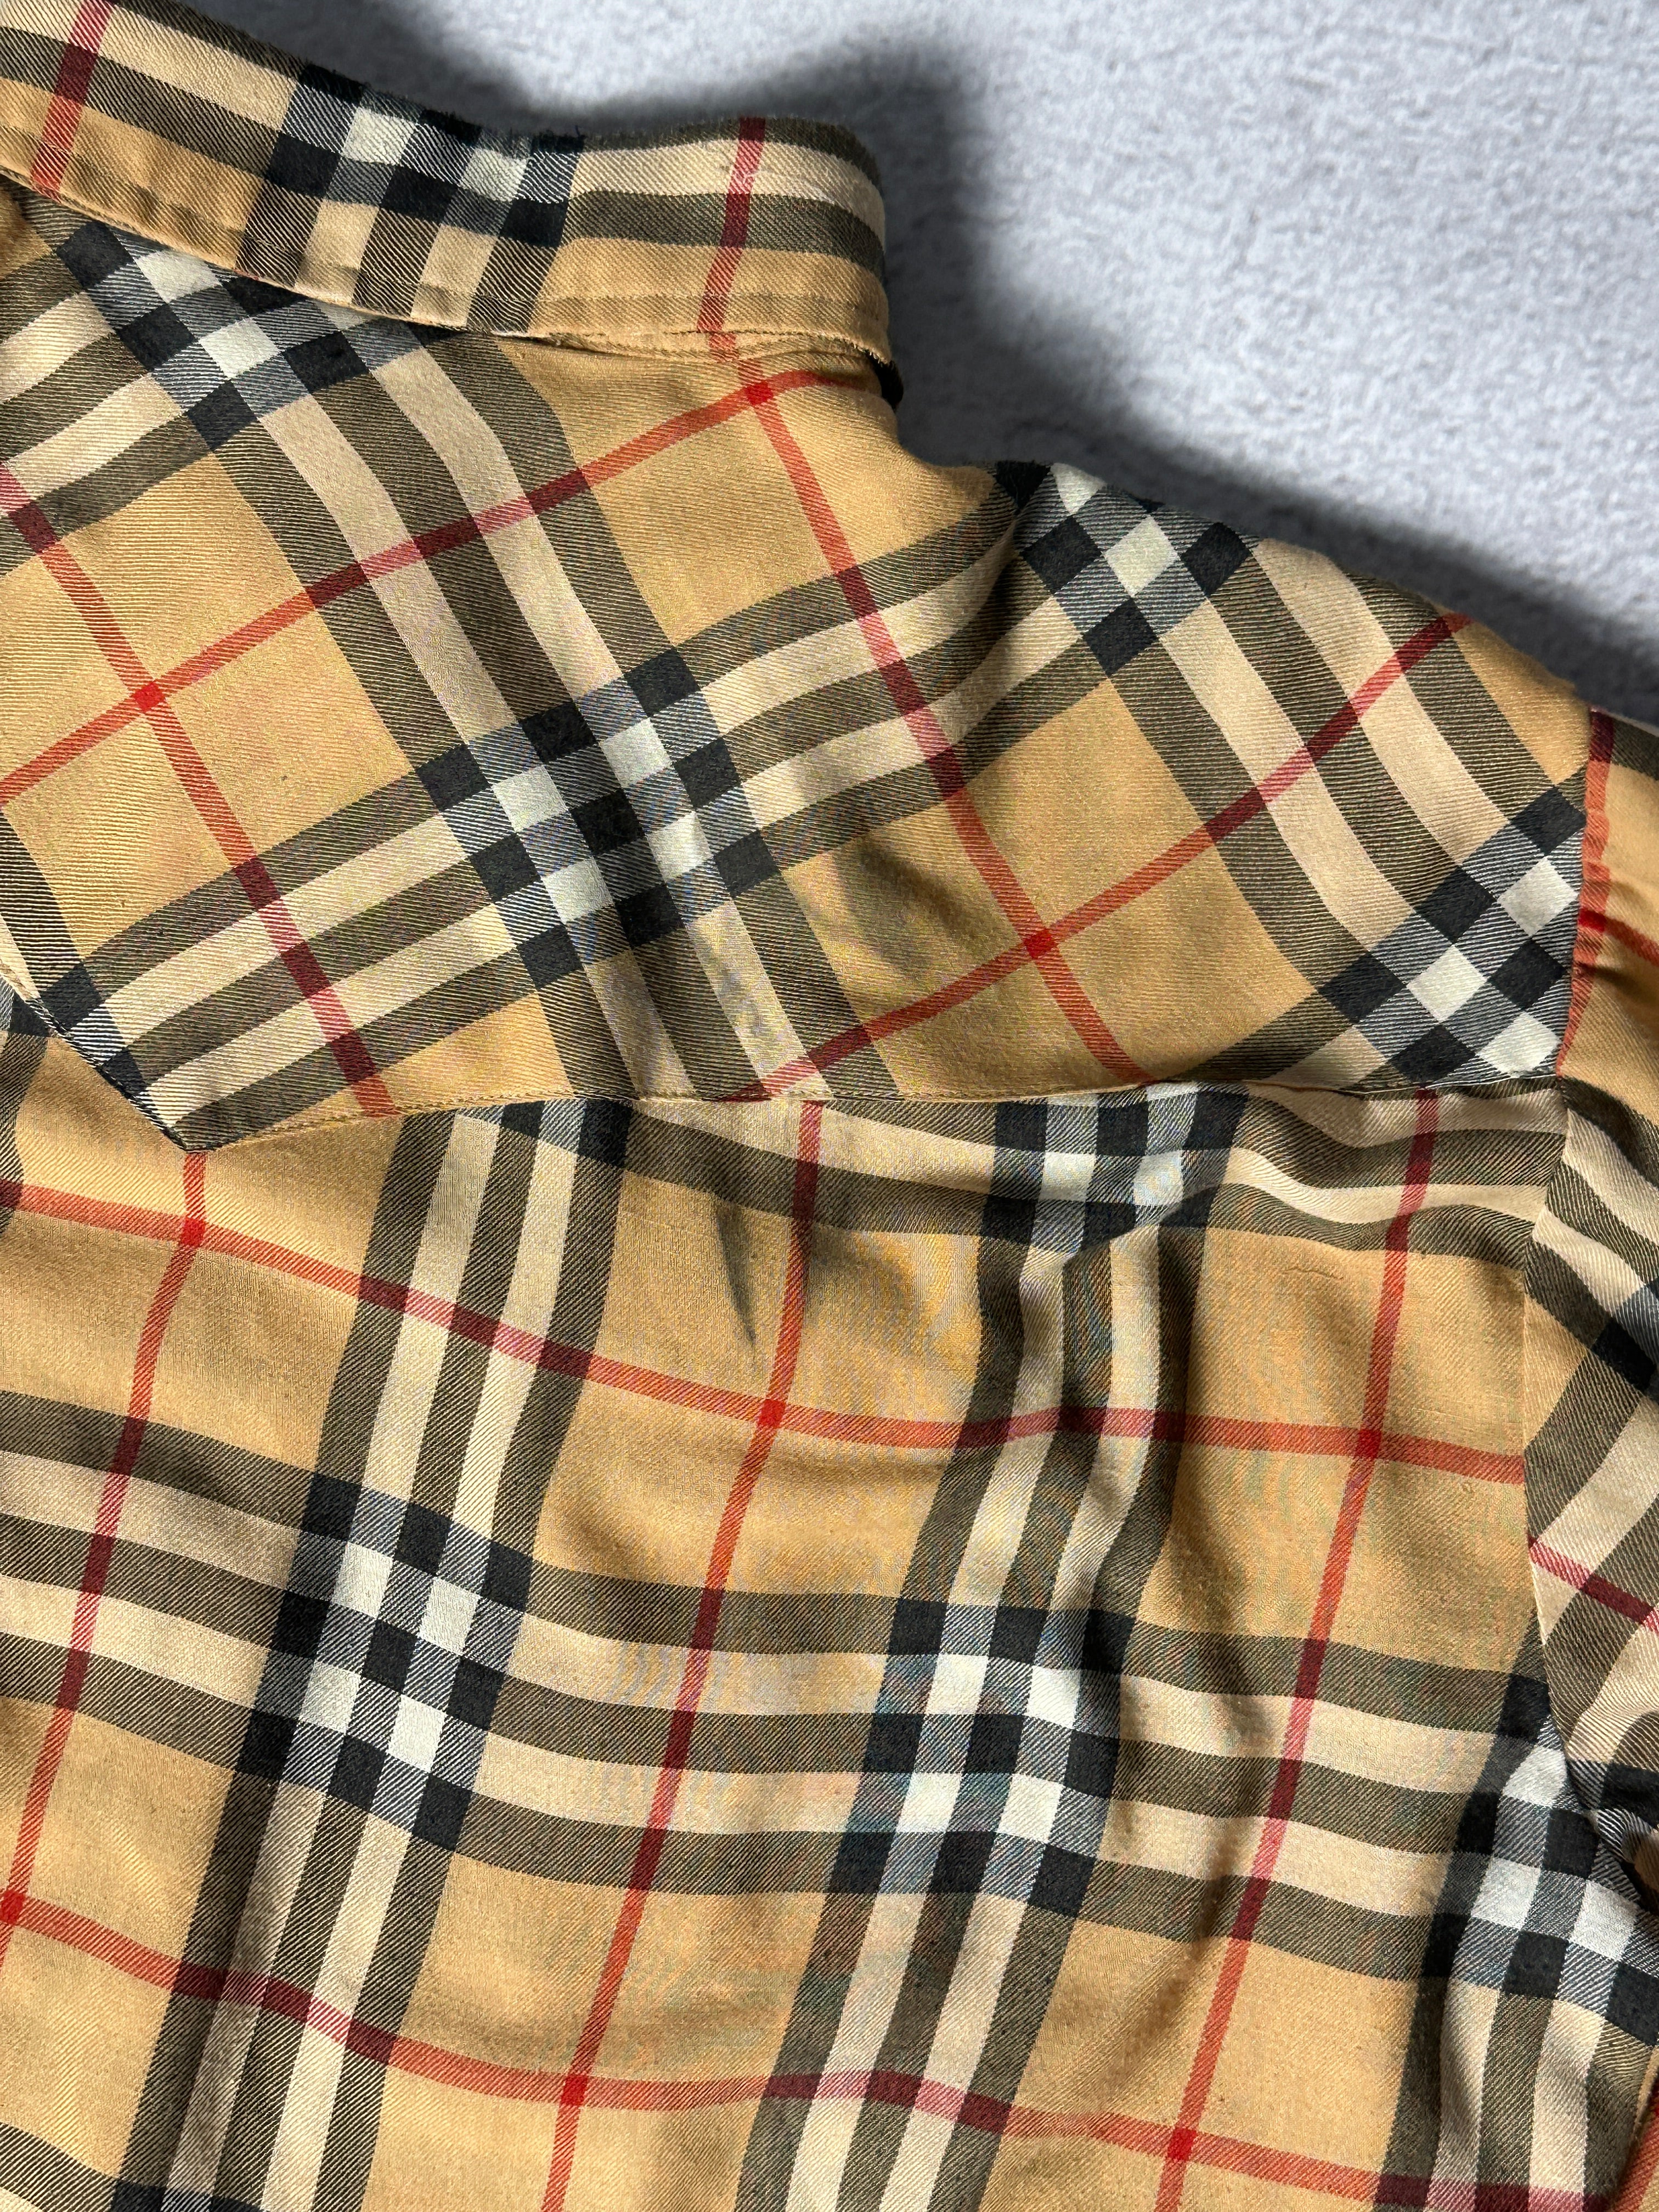 Vintage Flannel Buttoned Shirt - Men's Large